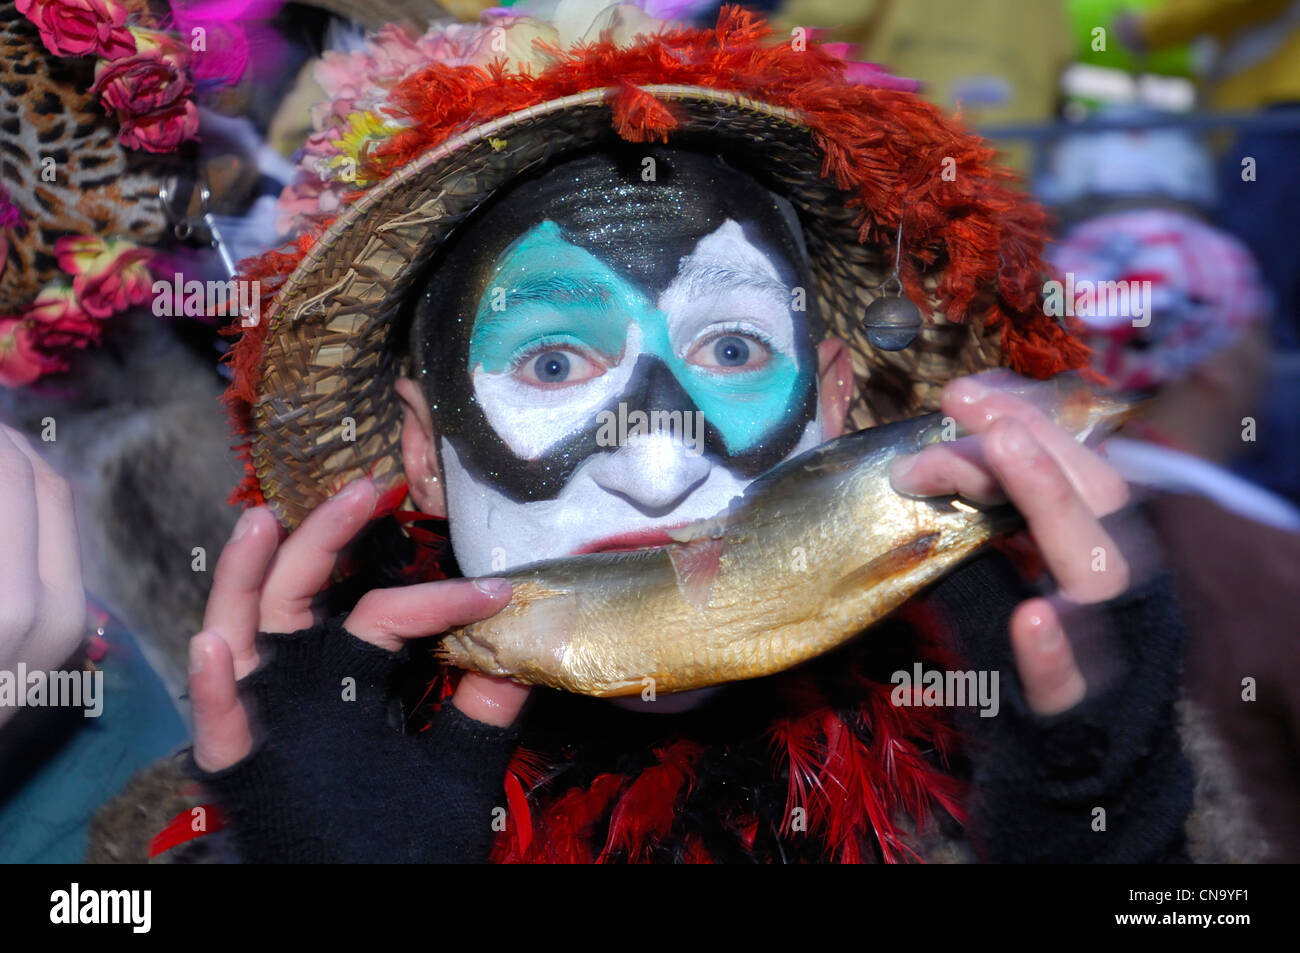 France, Nord, Dunkerque, carnaval de Dunkerque, carnival manger un hareng Banque D'Images